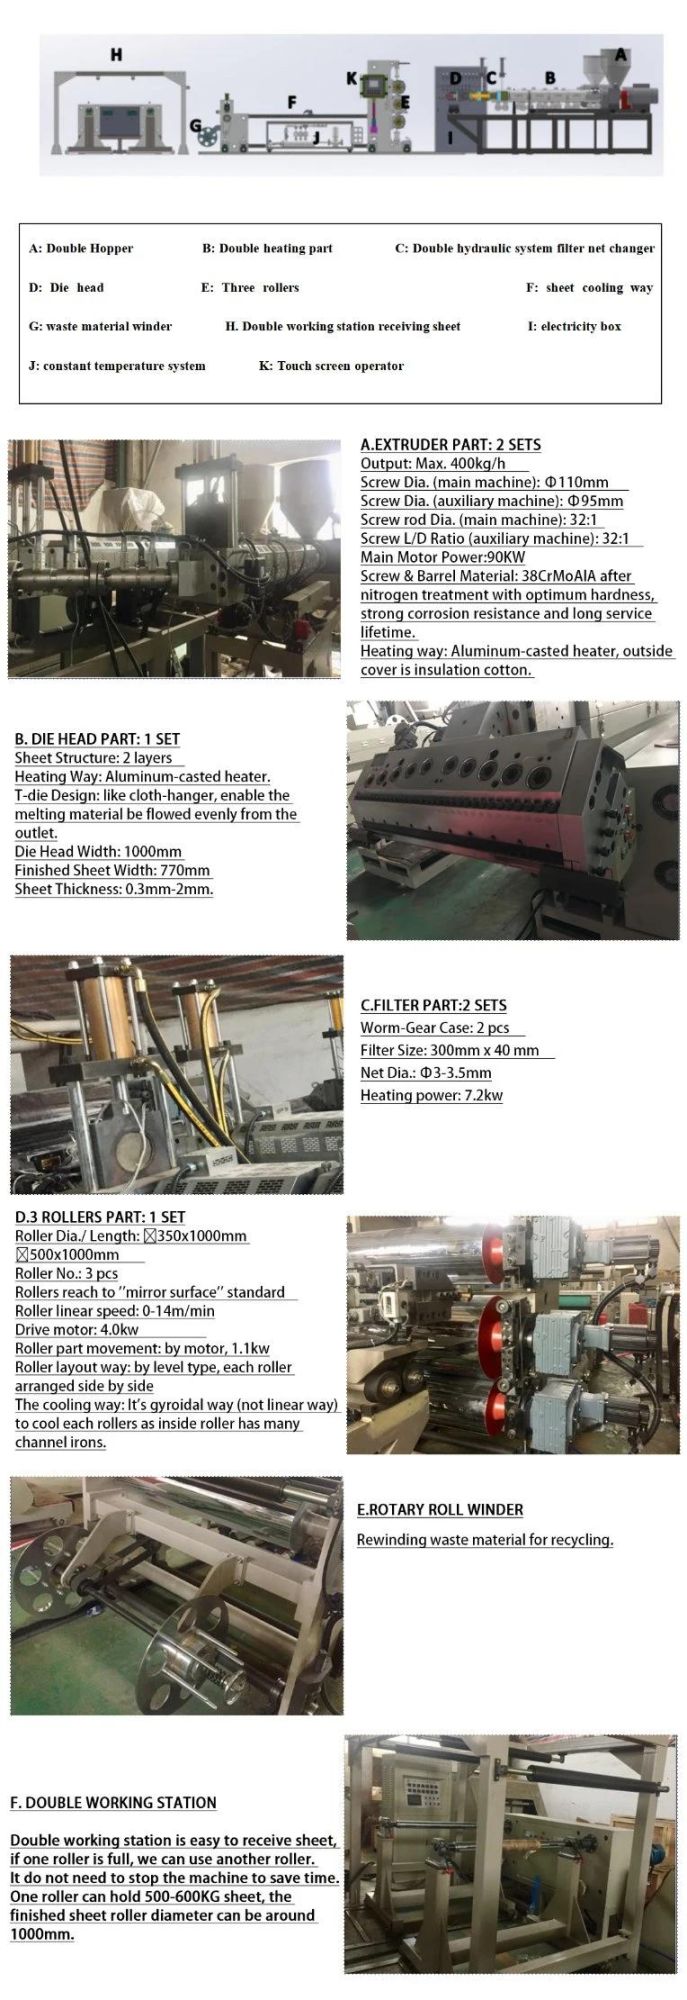 Factory Price Pet Extrusion Sheet Machine Plastic Cheap China Production Machine Fabrication Line